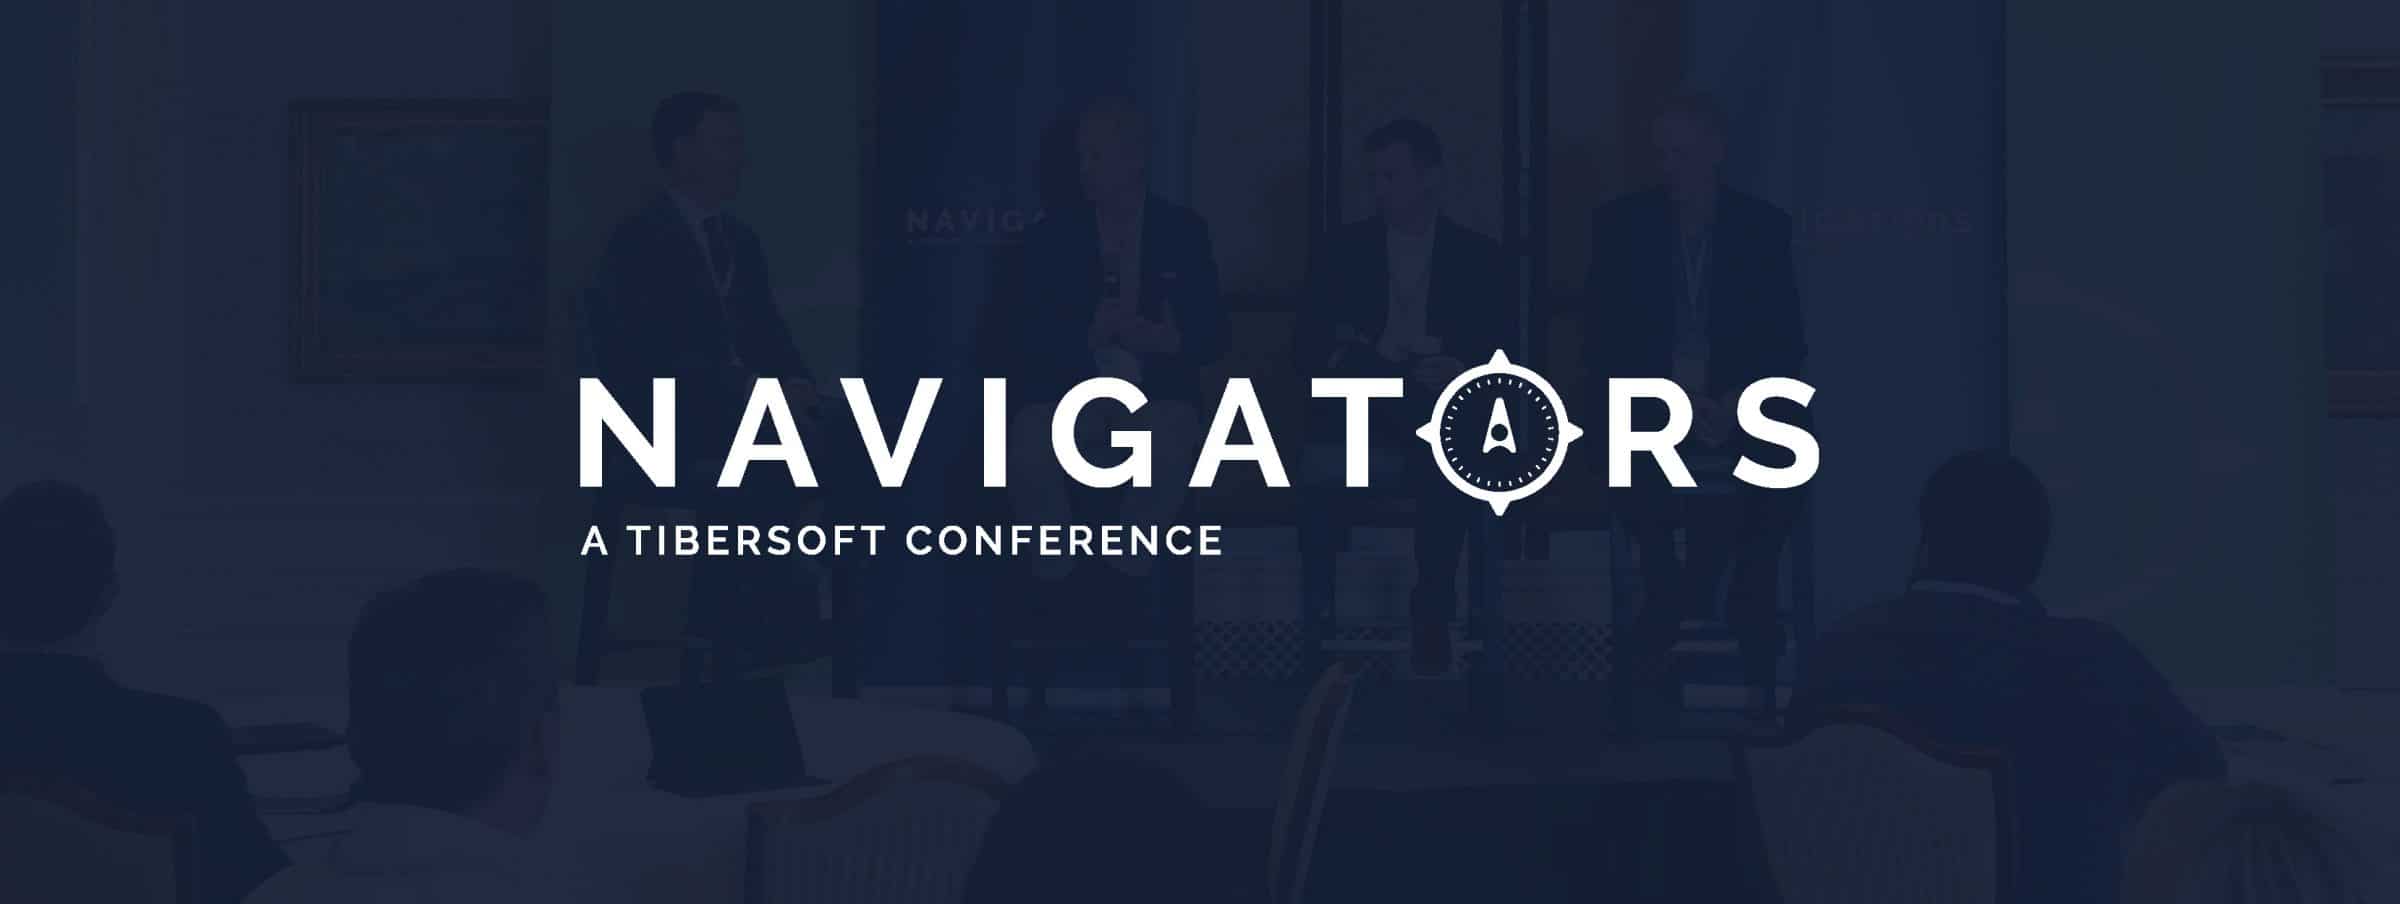 2019 Navigators Conference